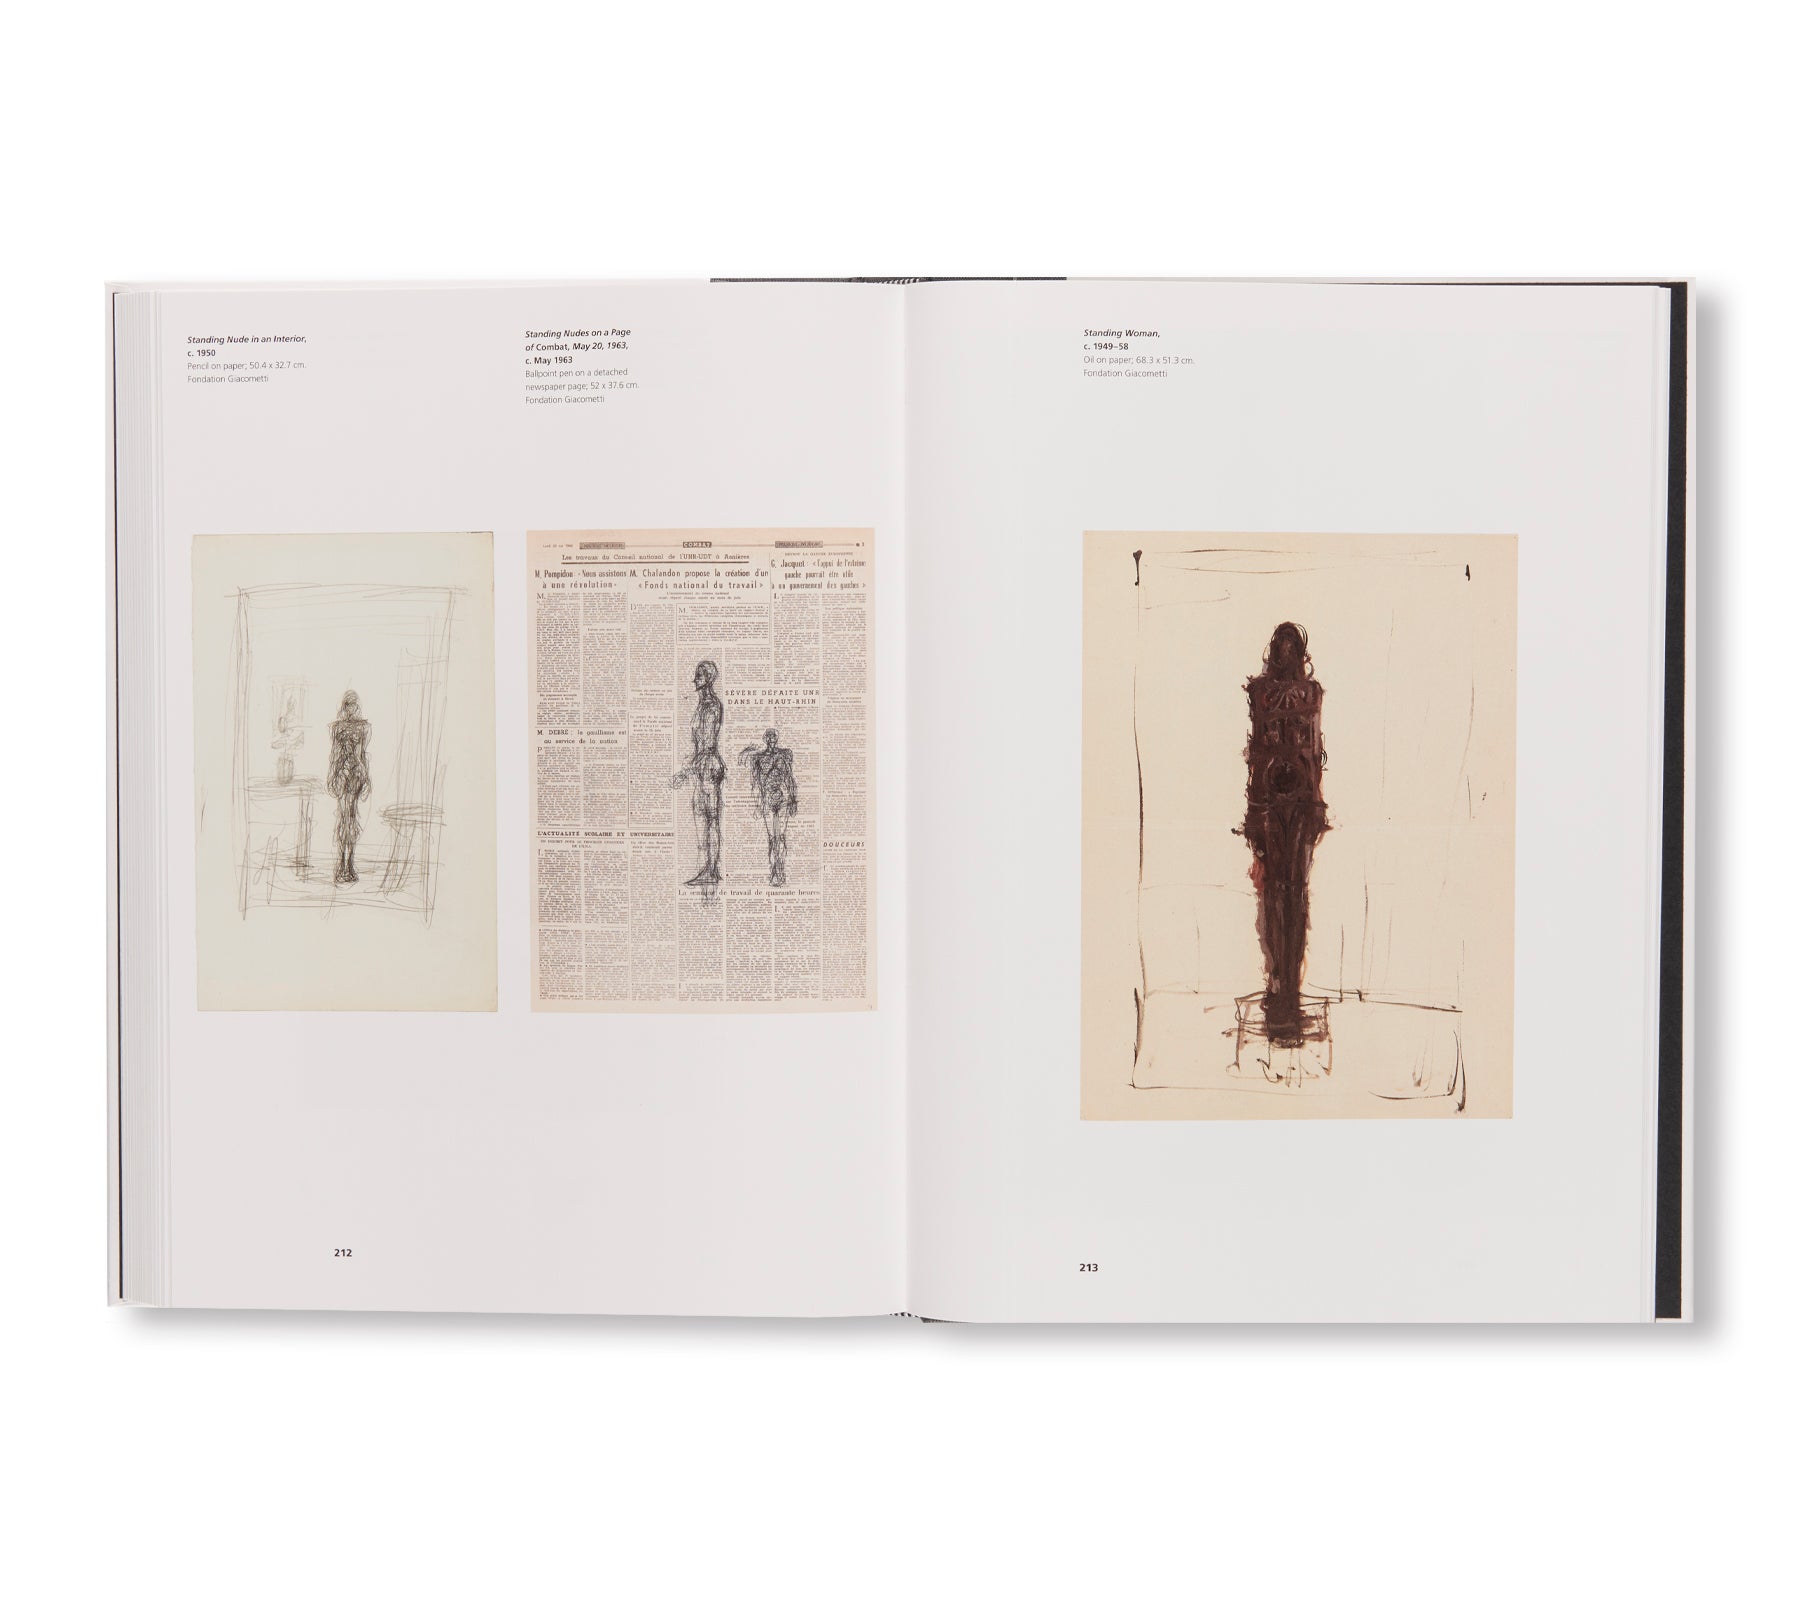 TOWARD THE ULTIMATE FIGURE by Alberto Giacometti